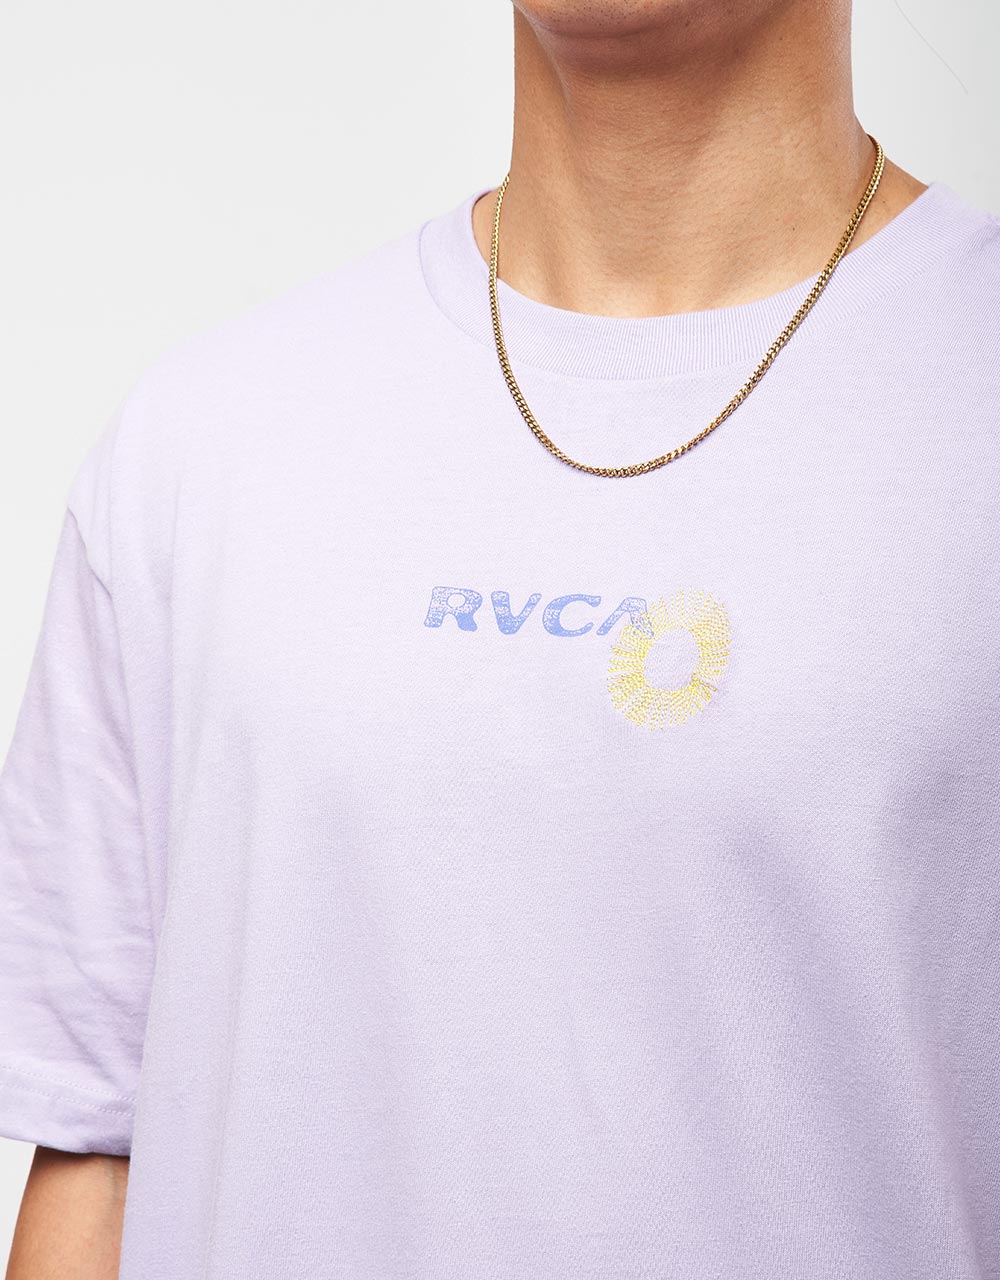 RVCA Atomic Jam T-Shirt - Musk Stick